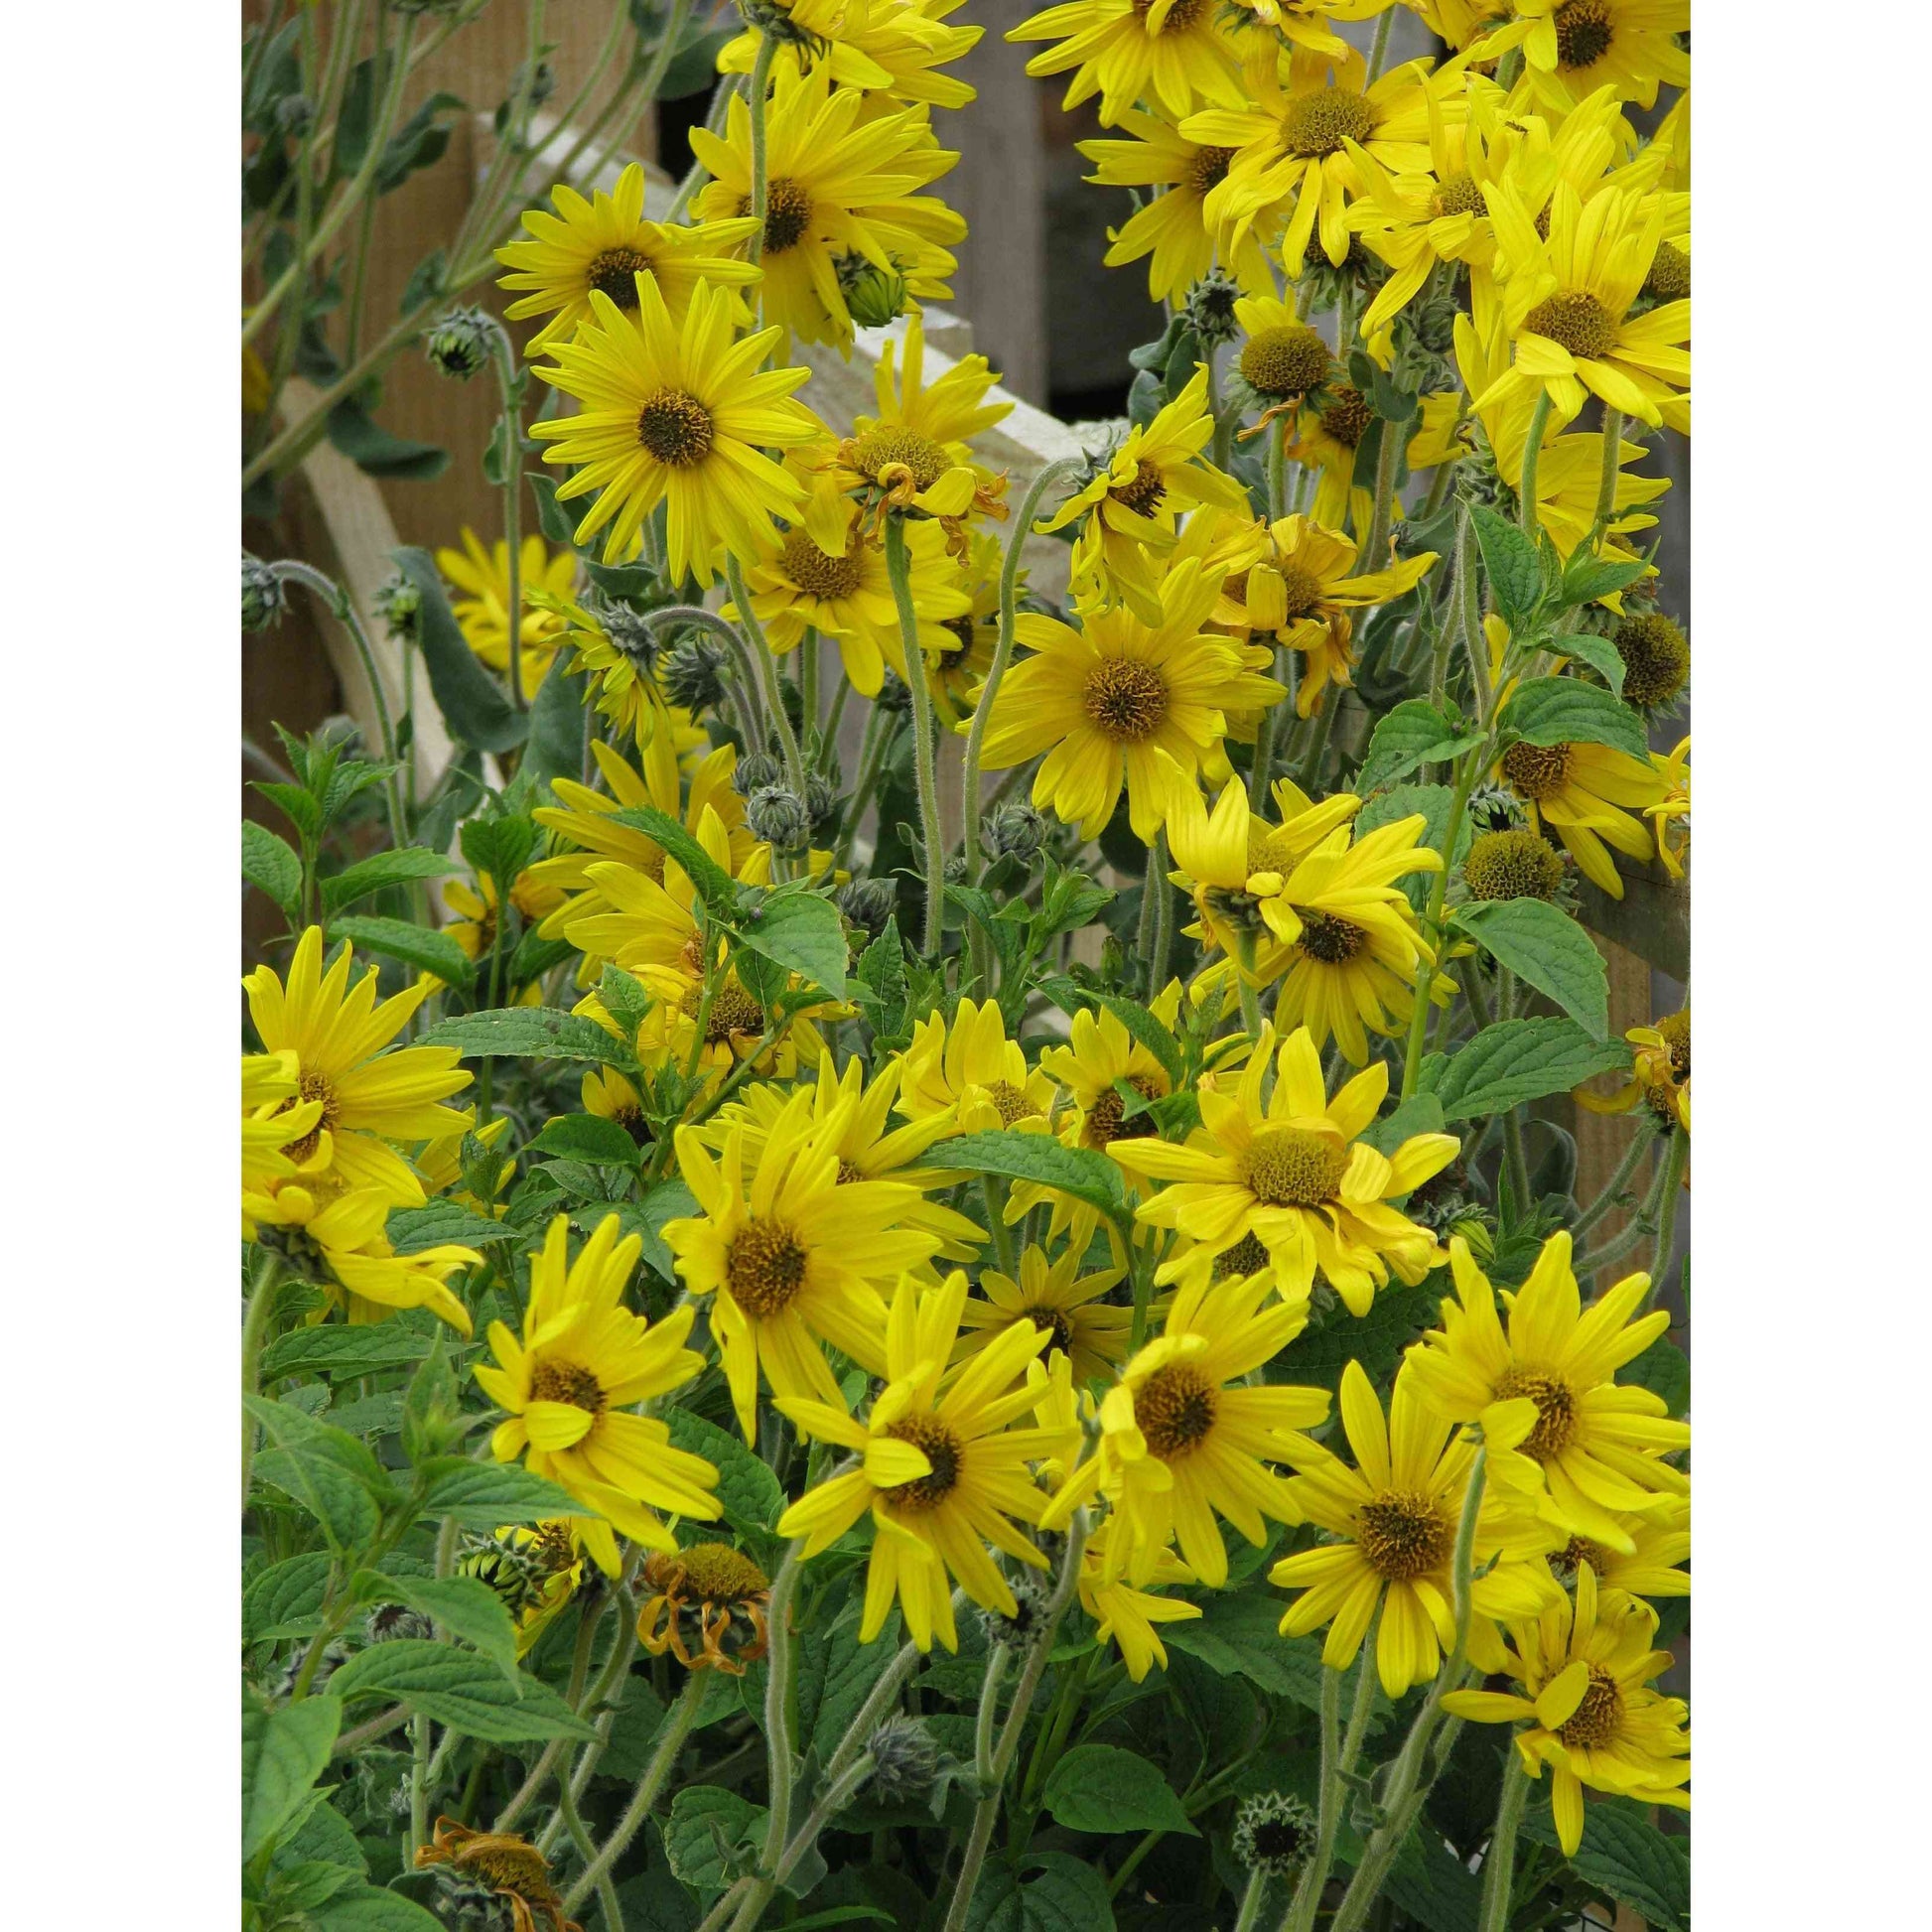 Helianthus mollis (Downy Sunflower)  Natural Communities LLC